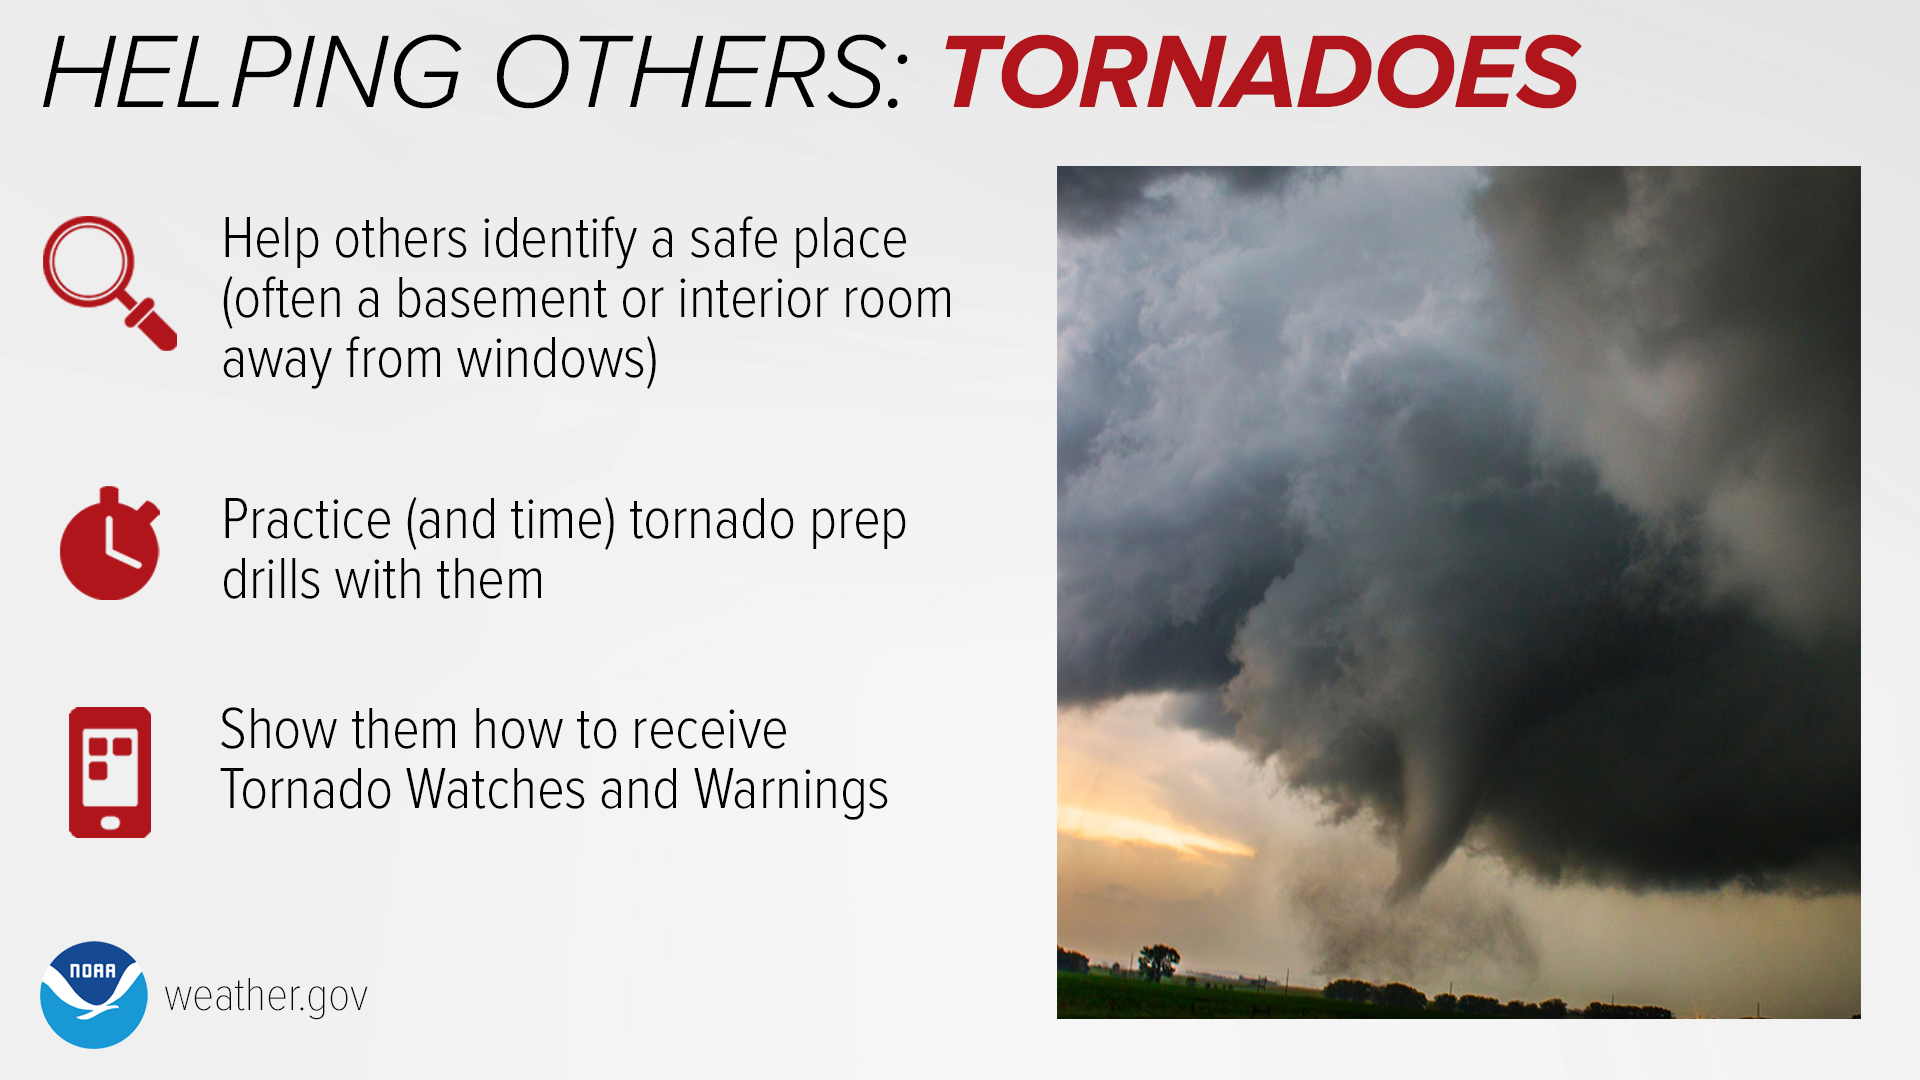 Preparing for a Tornado - StormAware Tornado Safety